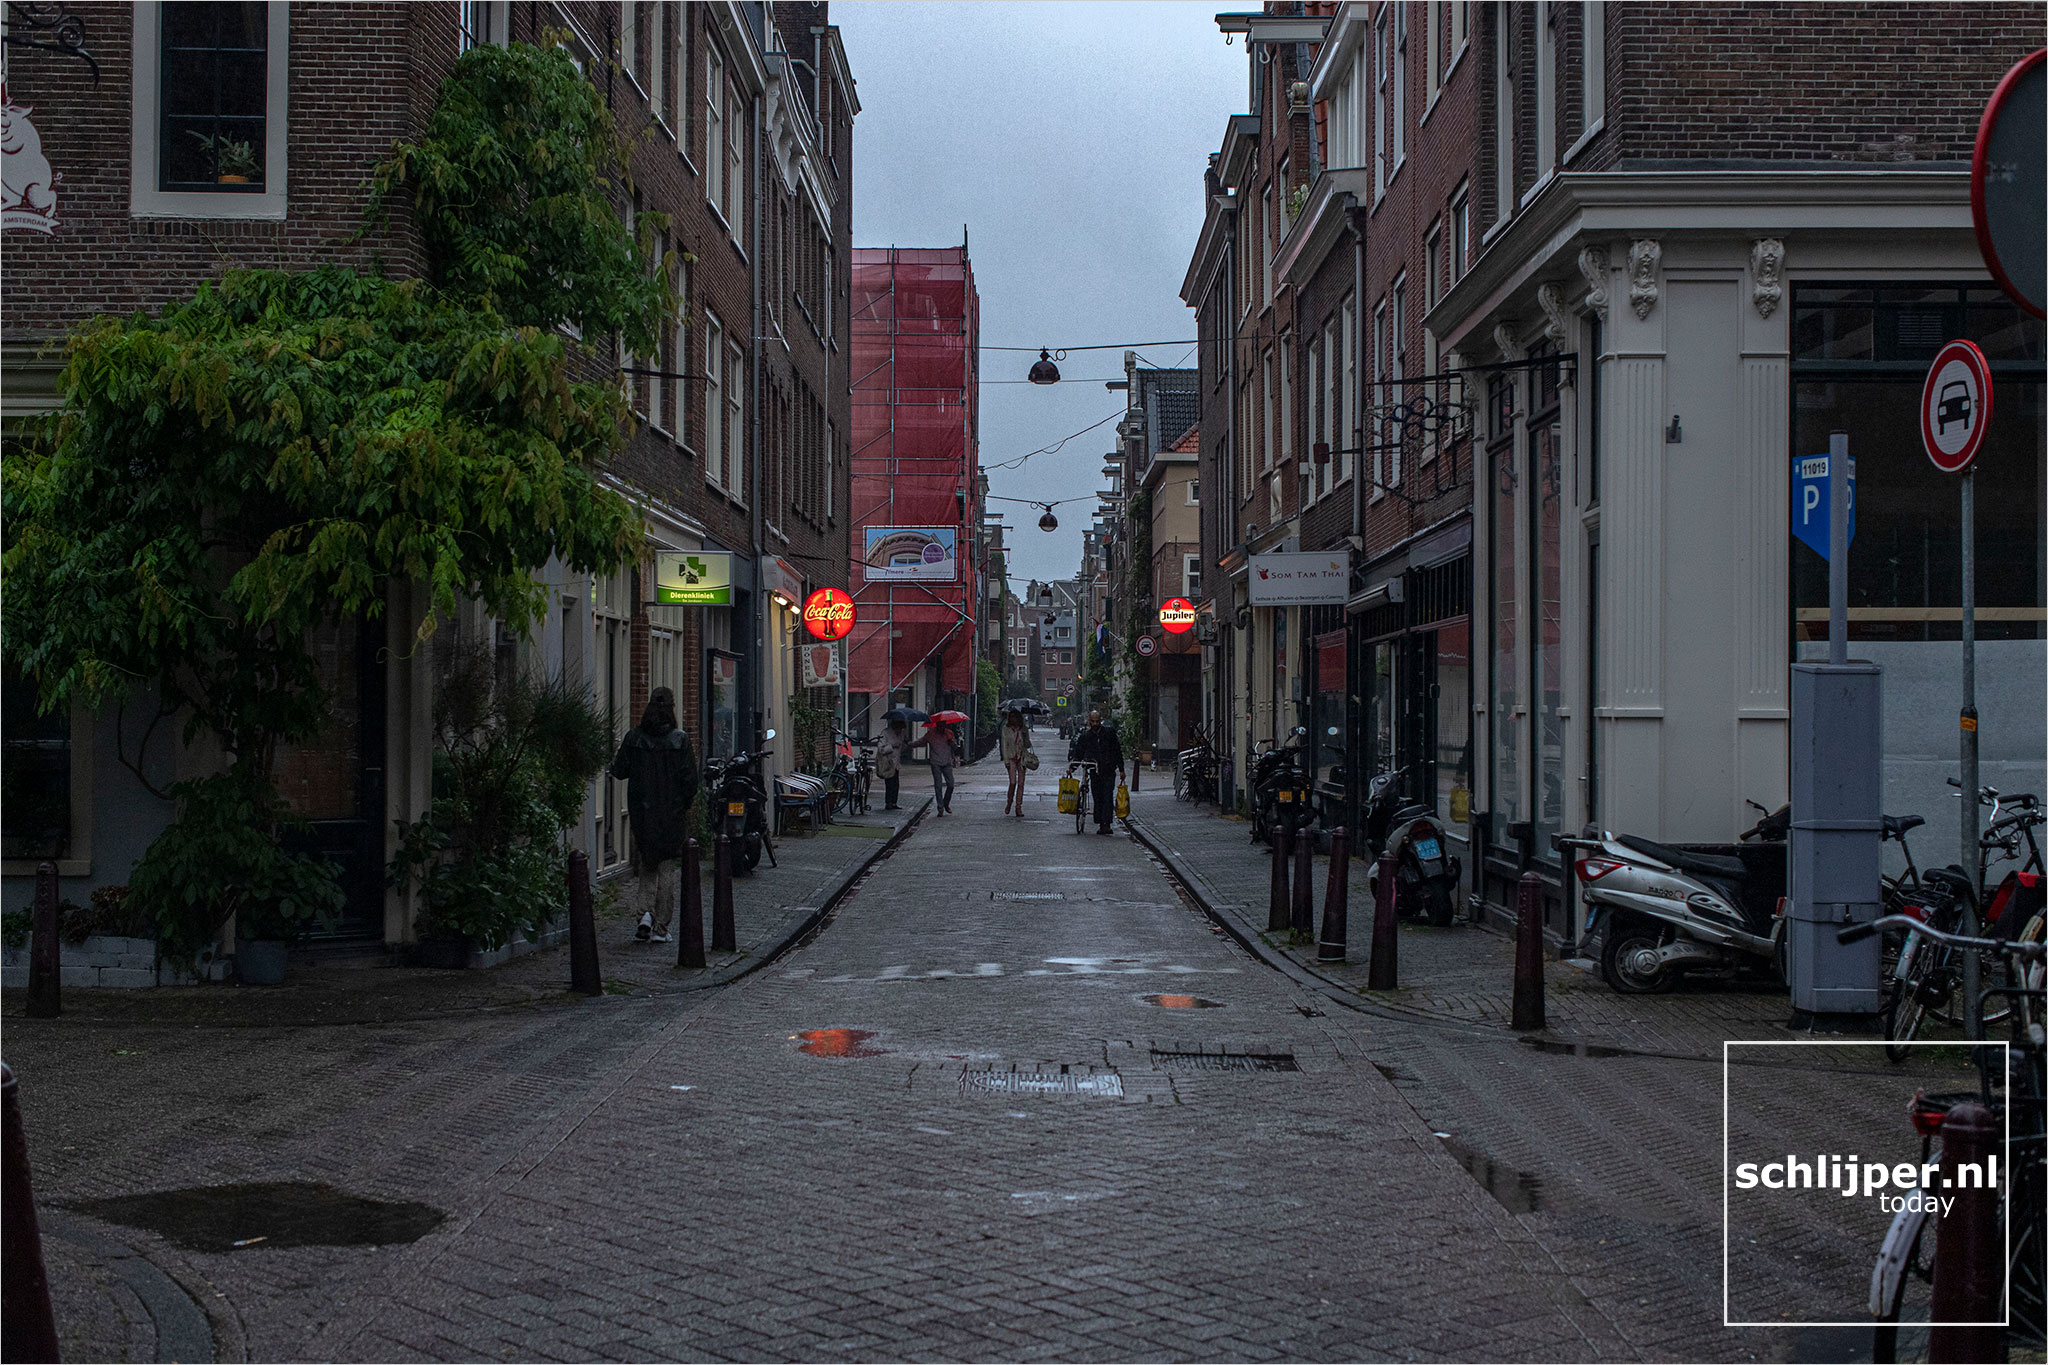 Nederland, Amsterdam, 4 juli 2020